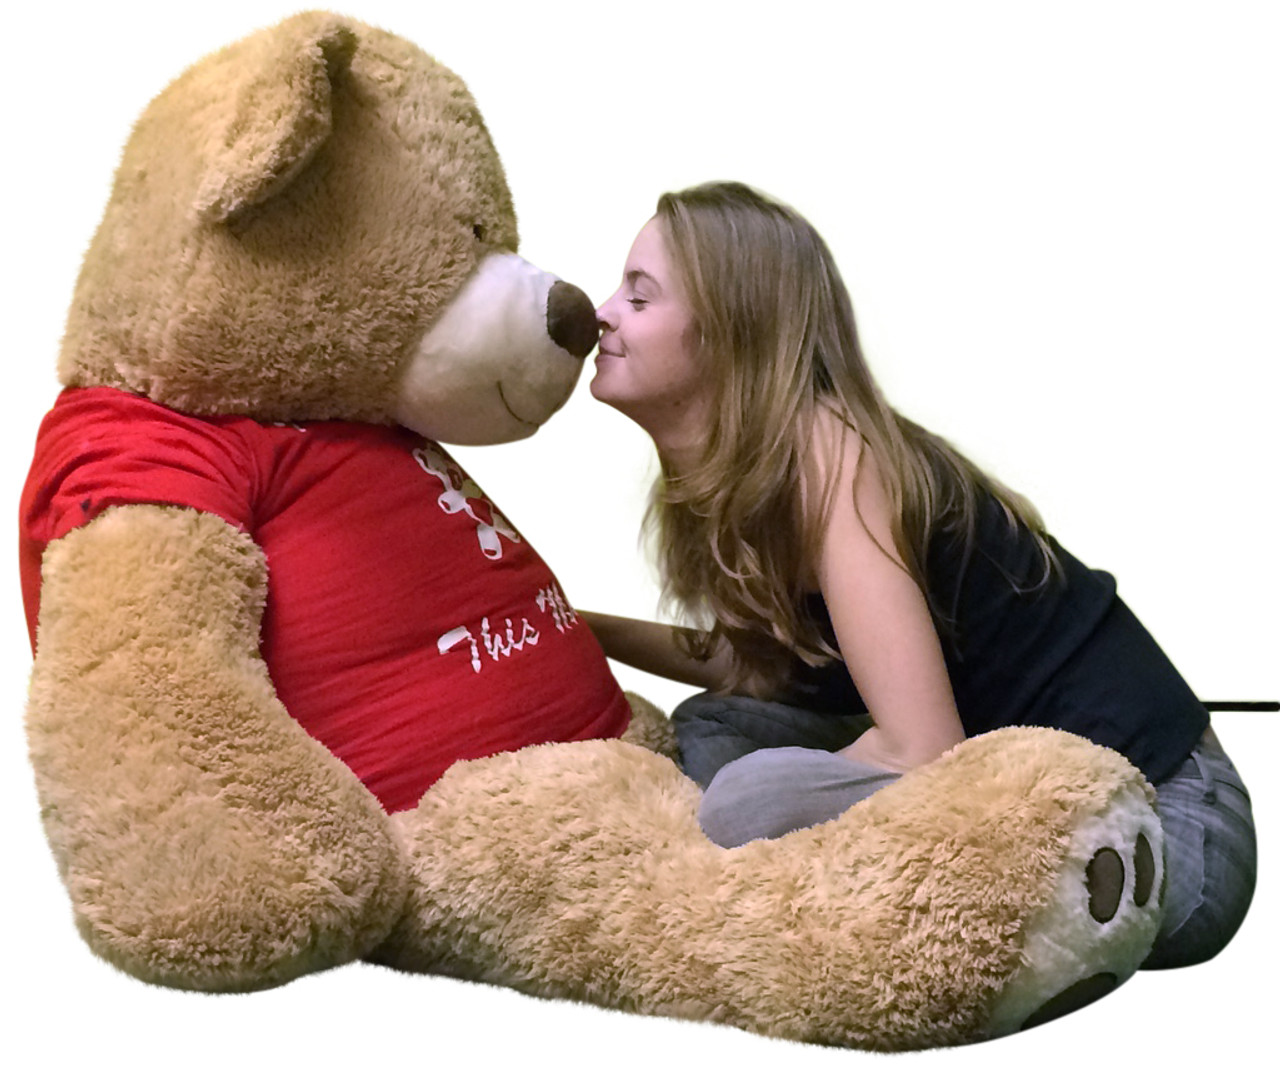 T-shirt peluche ours en peluche / ours en peluche avec coeur blanc I Love  You - 24 cm